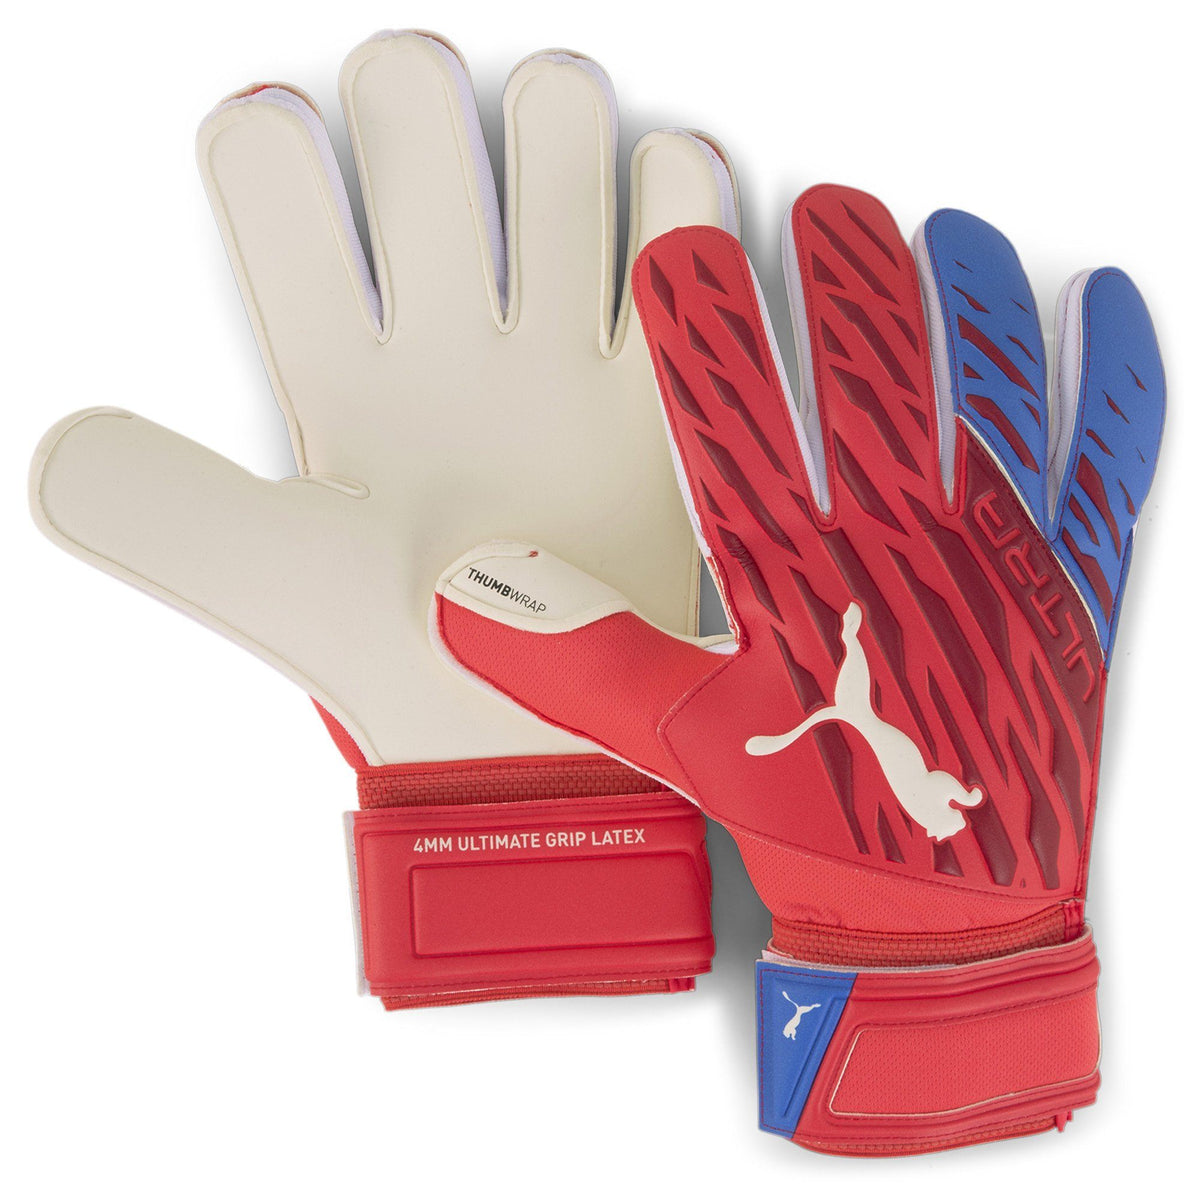 PUMA ULTRA Grip 1 RC Goalkeeper Gloves | 04178701 Goalkeeper Gloves Puma 7 Sunblaze-White-Bluemazing 